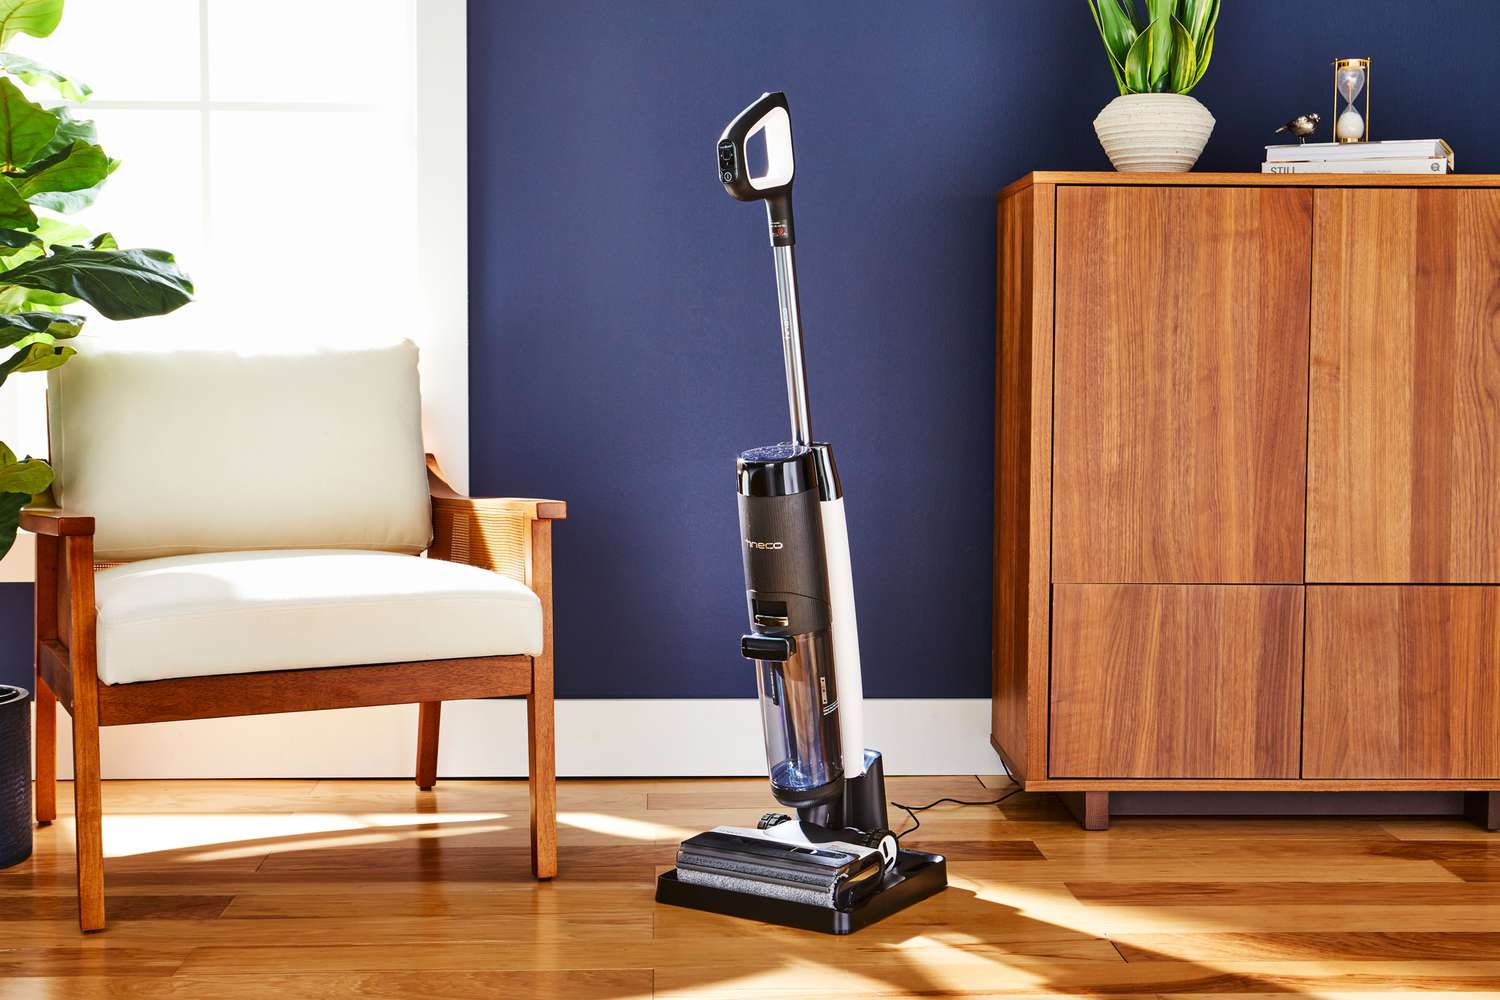 Tineco Floor One S7 Pro Smart Wet Dry Vacuum Cleaner on wooden floor next to furniture